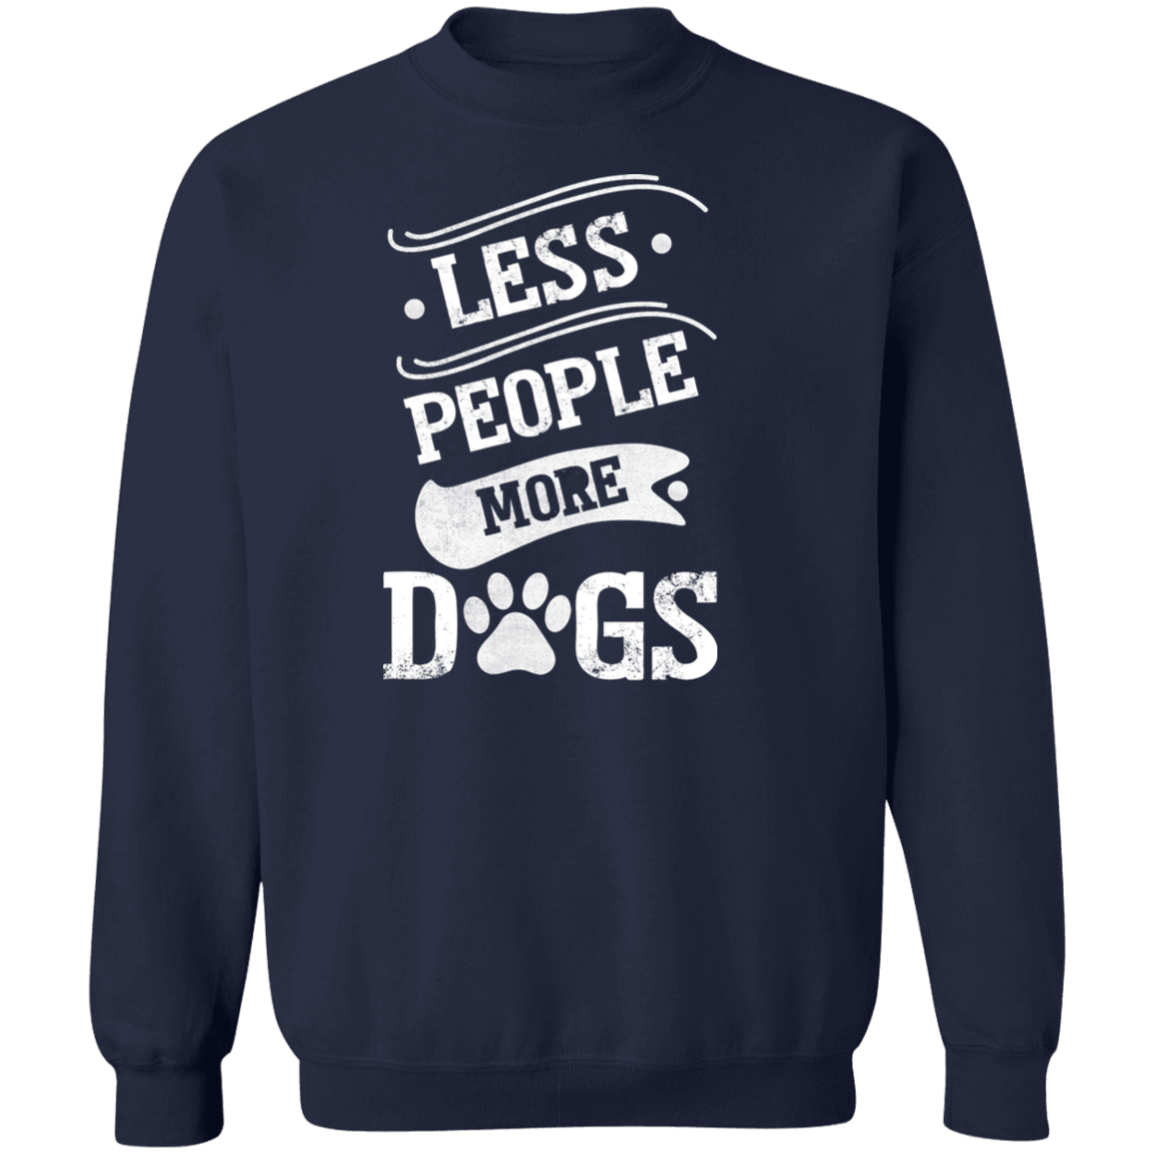 Less People More Dogs - Sweatshirt.